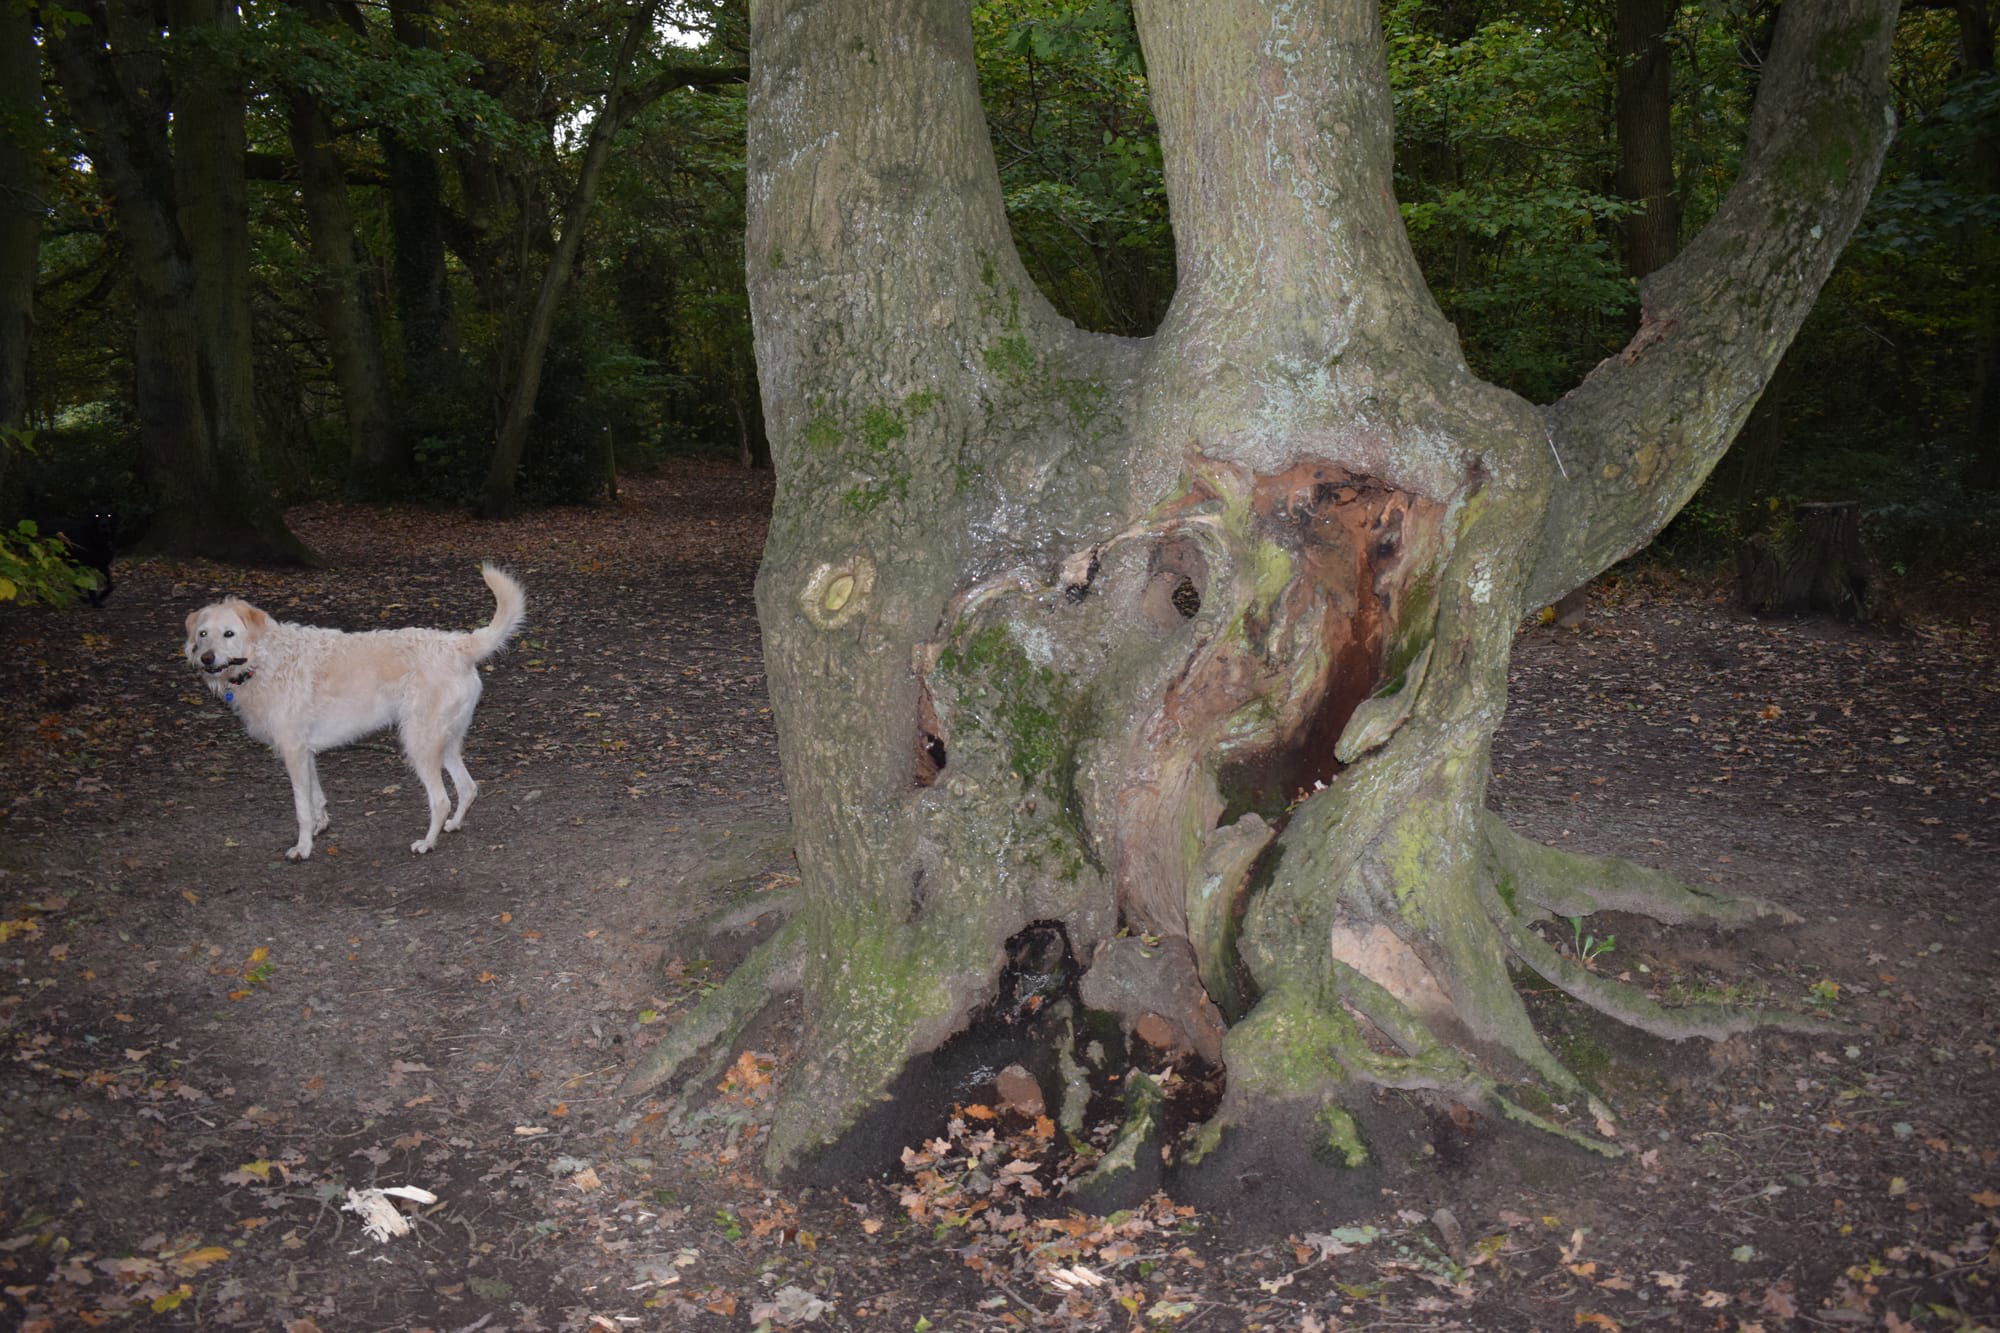 Dog walking among the ancient trees